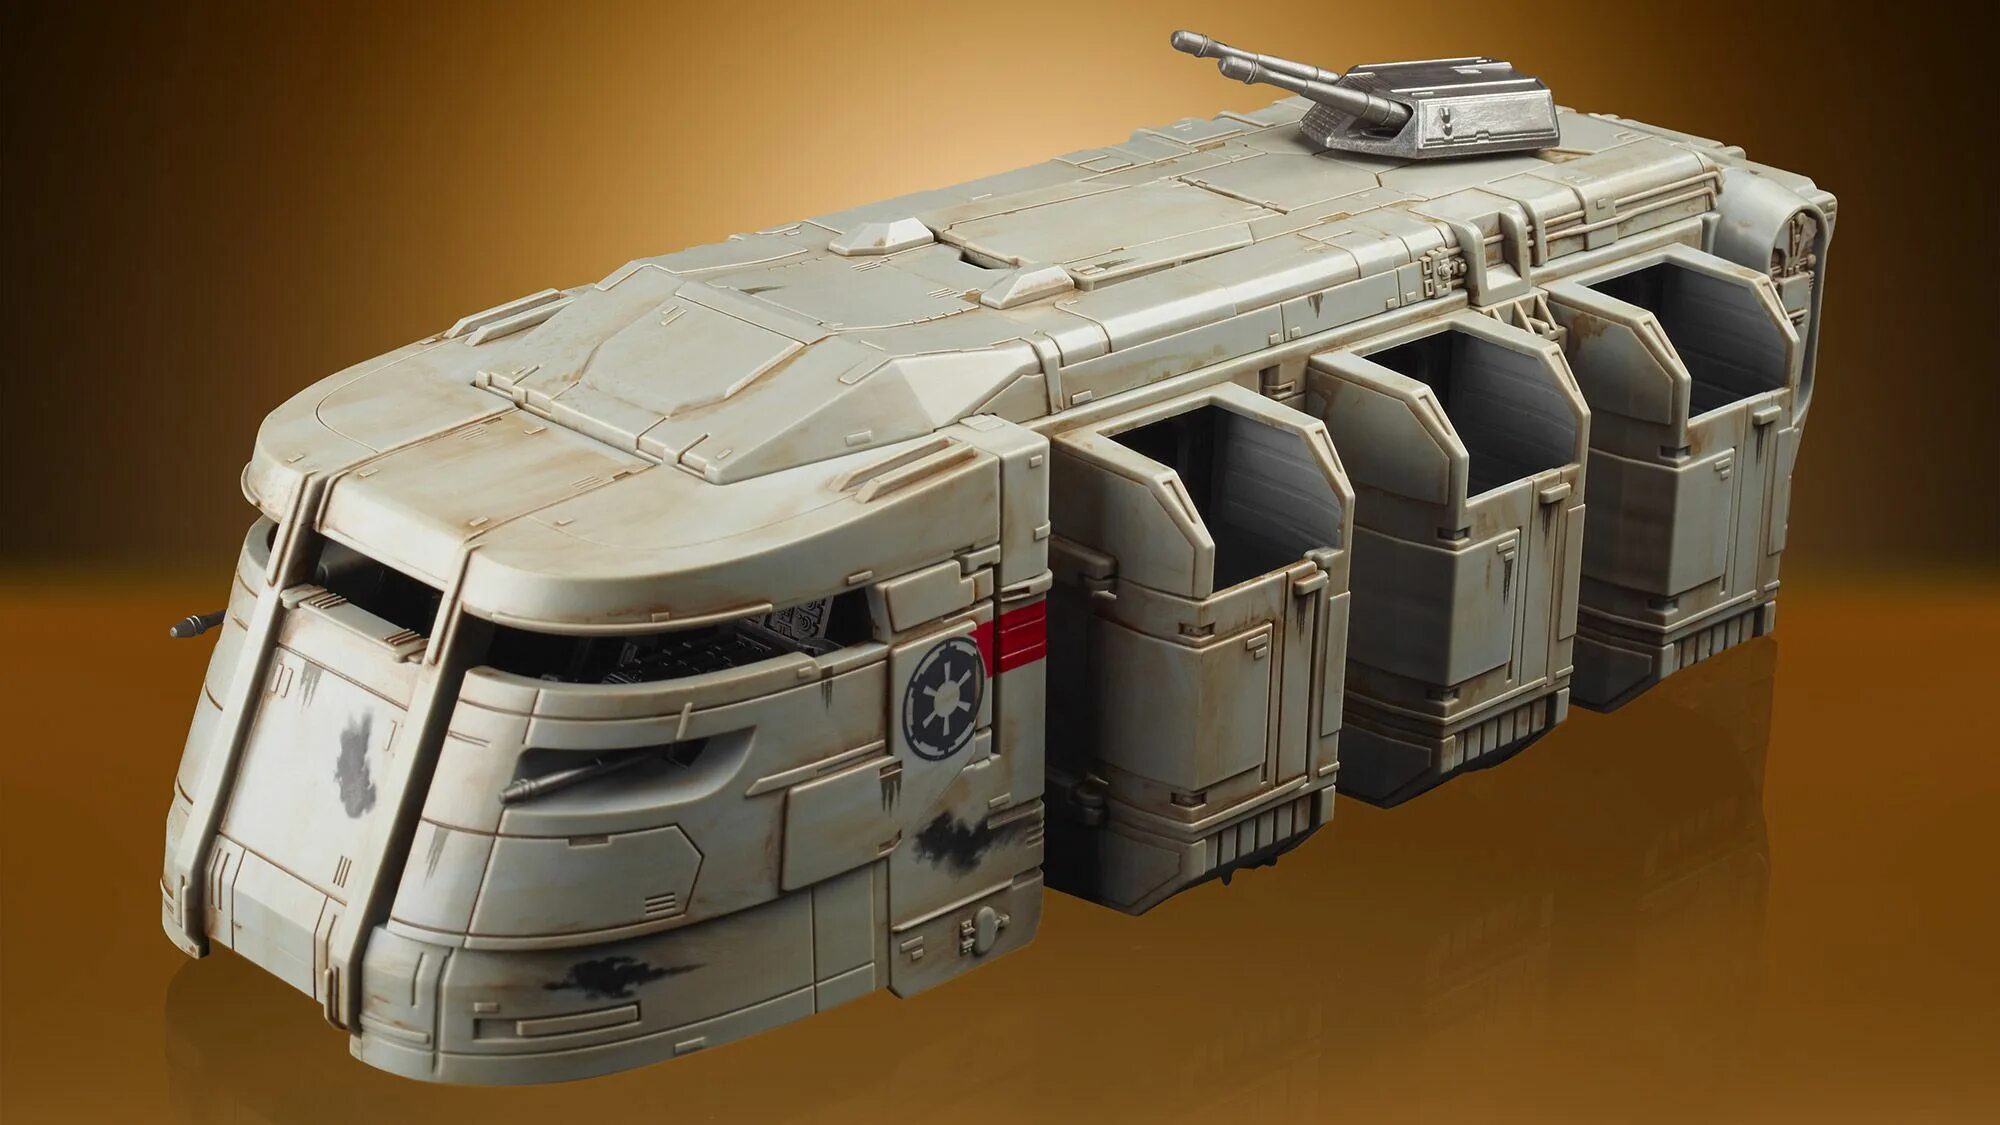 Trexlers. Транспортник империи Звездные войны. Имперский транспортник Звездные войны. K79-s80 Imperial Troop transport. Star Wars Imperial Mandalorian.